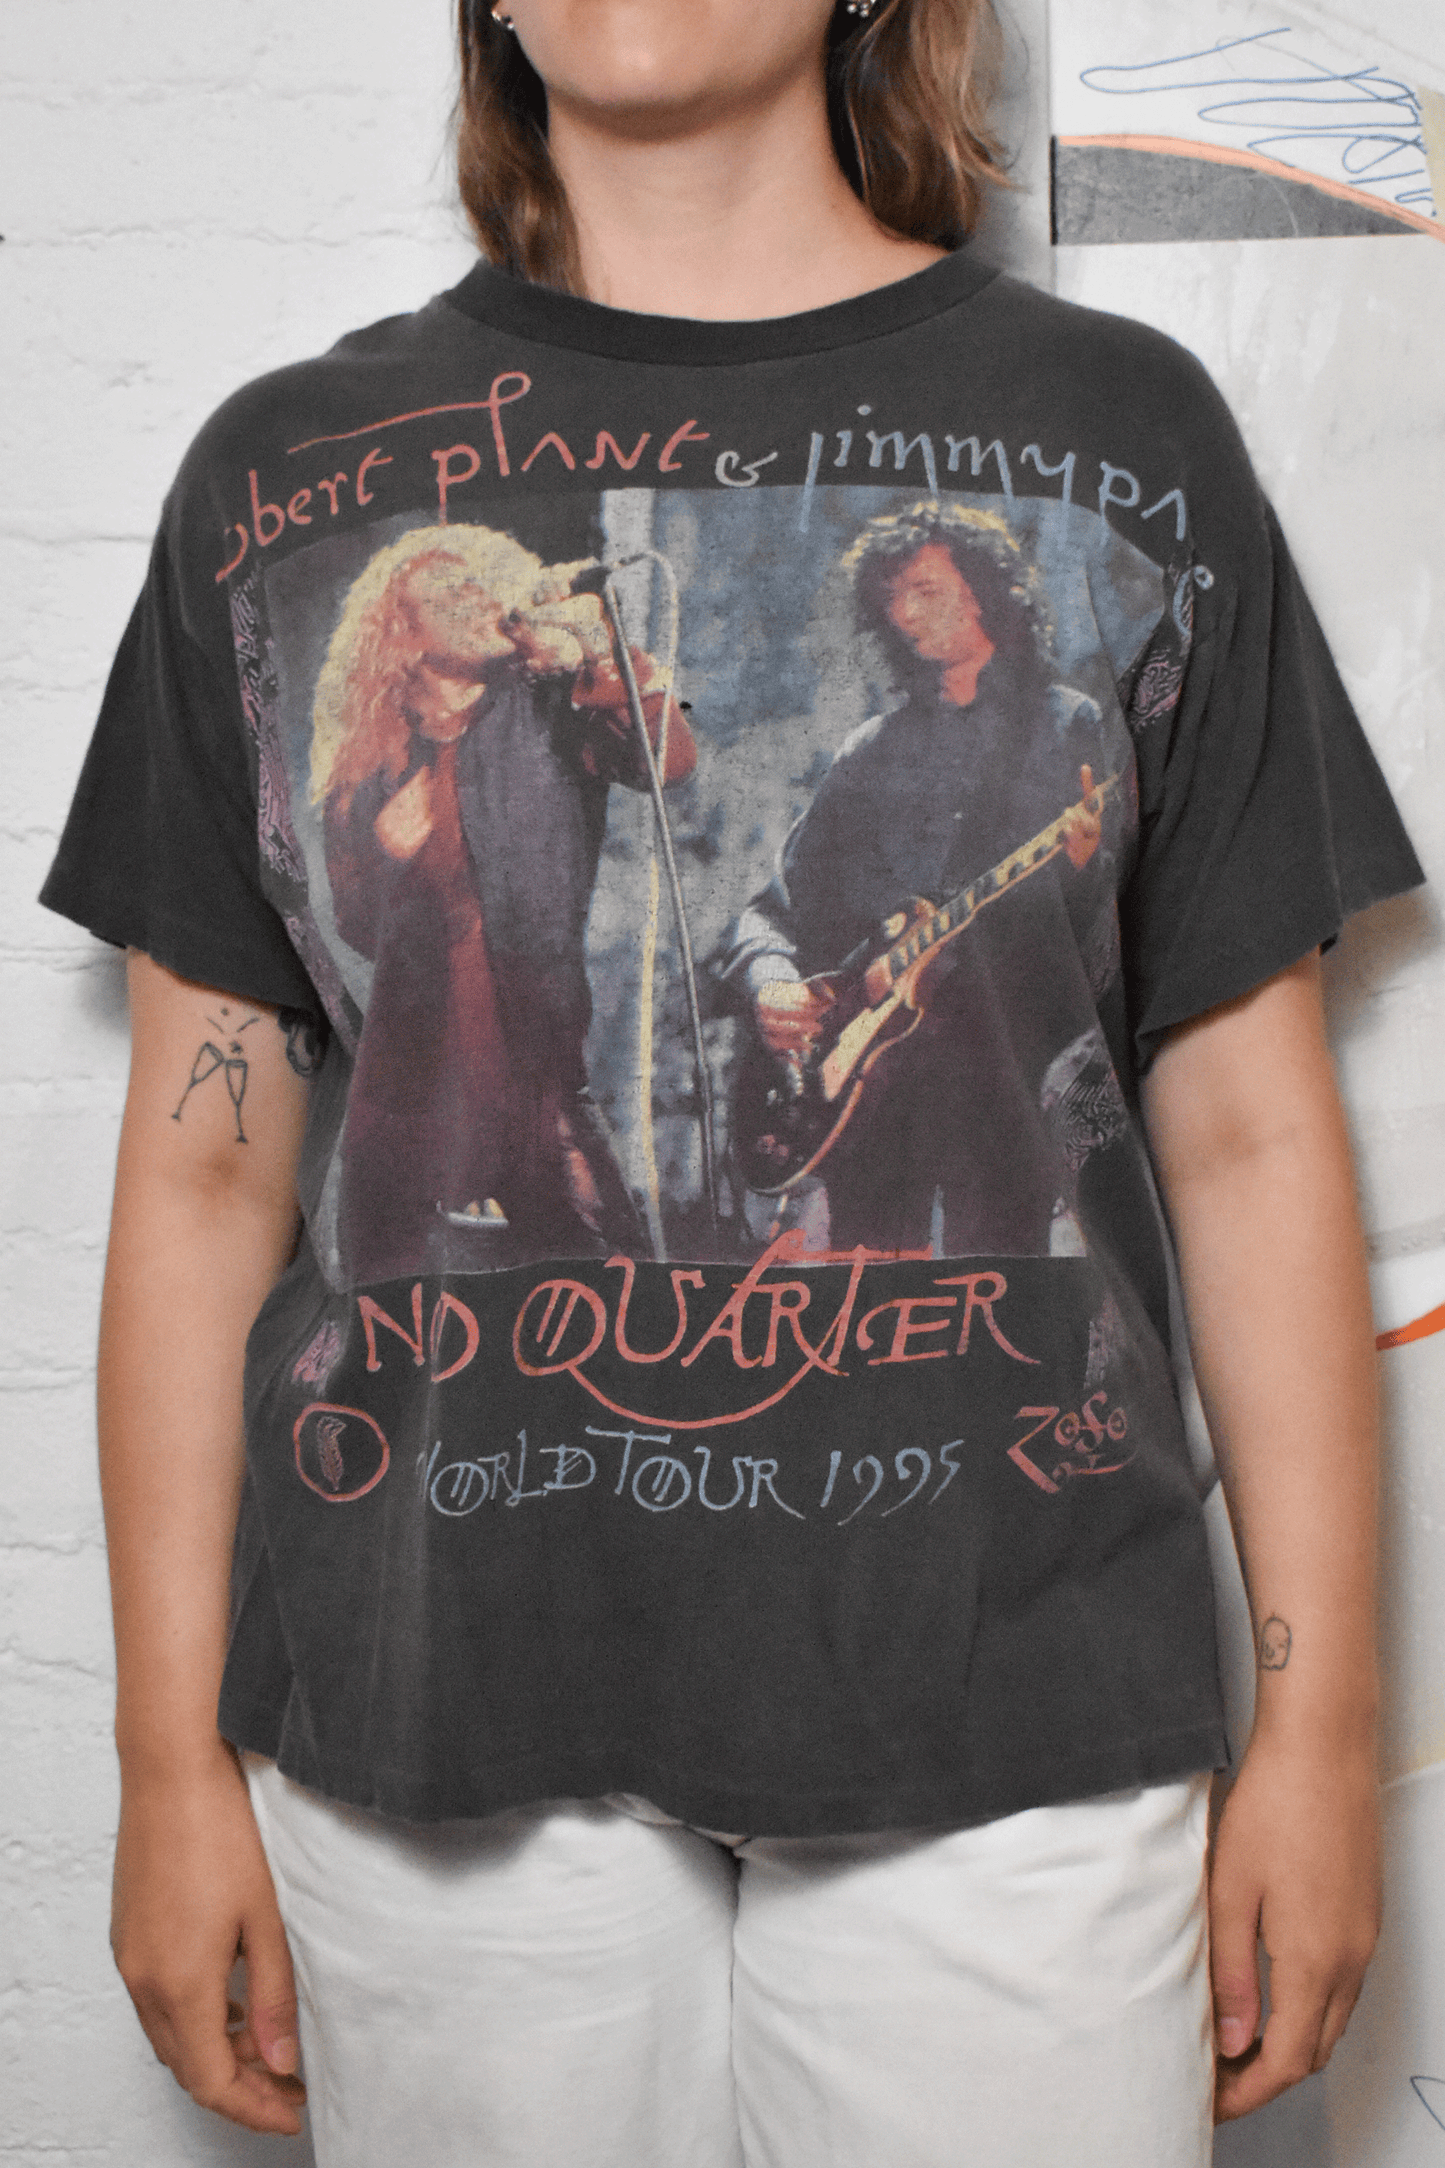 Vintage 1995 "Jimmy Page Robert Plane No Quarter World Tour" Led Zeppelin T-shirt